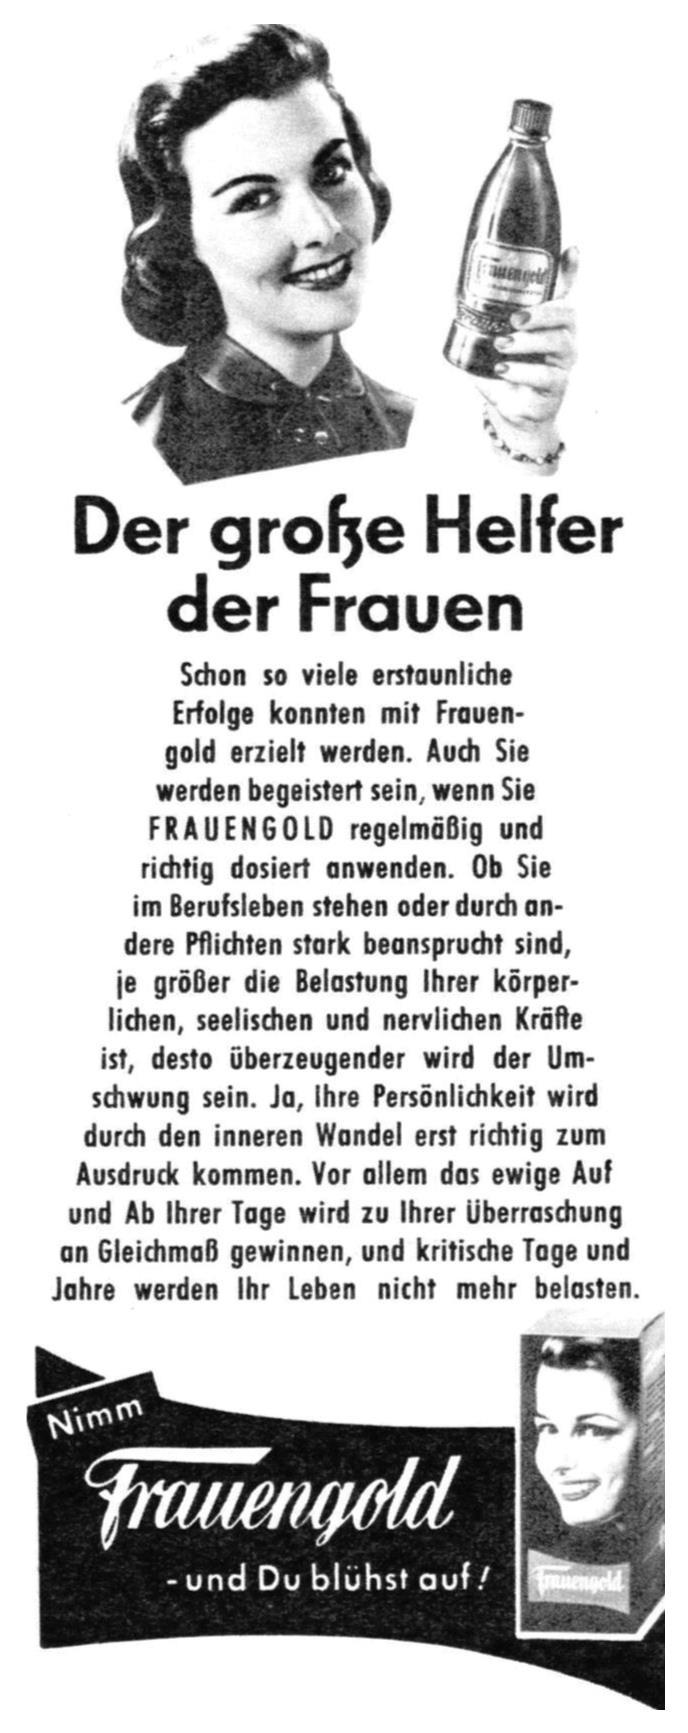 Frauengold 1958 0.jpg